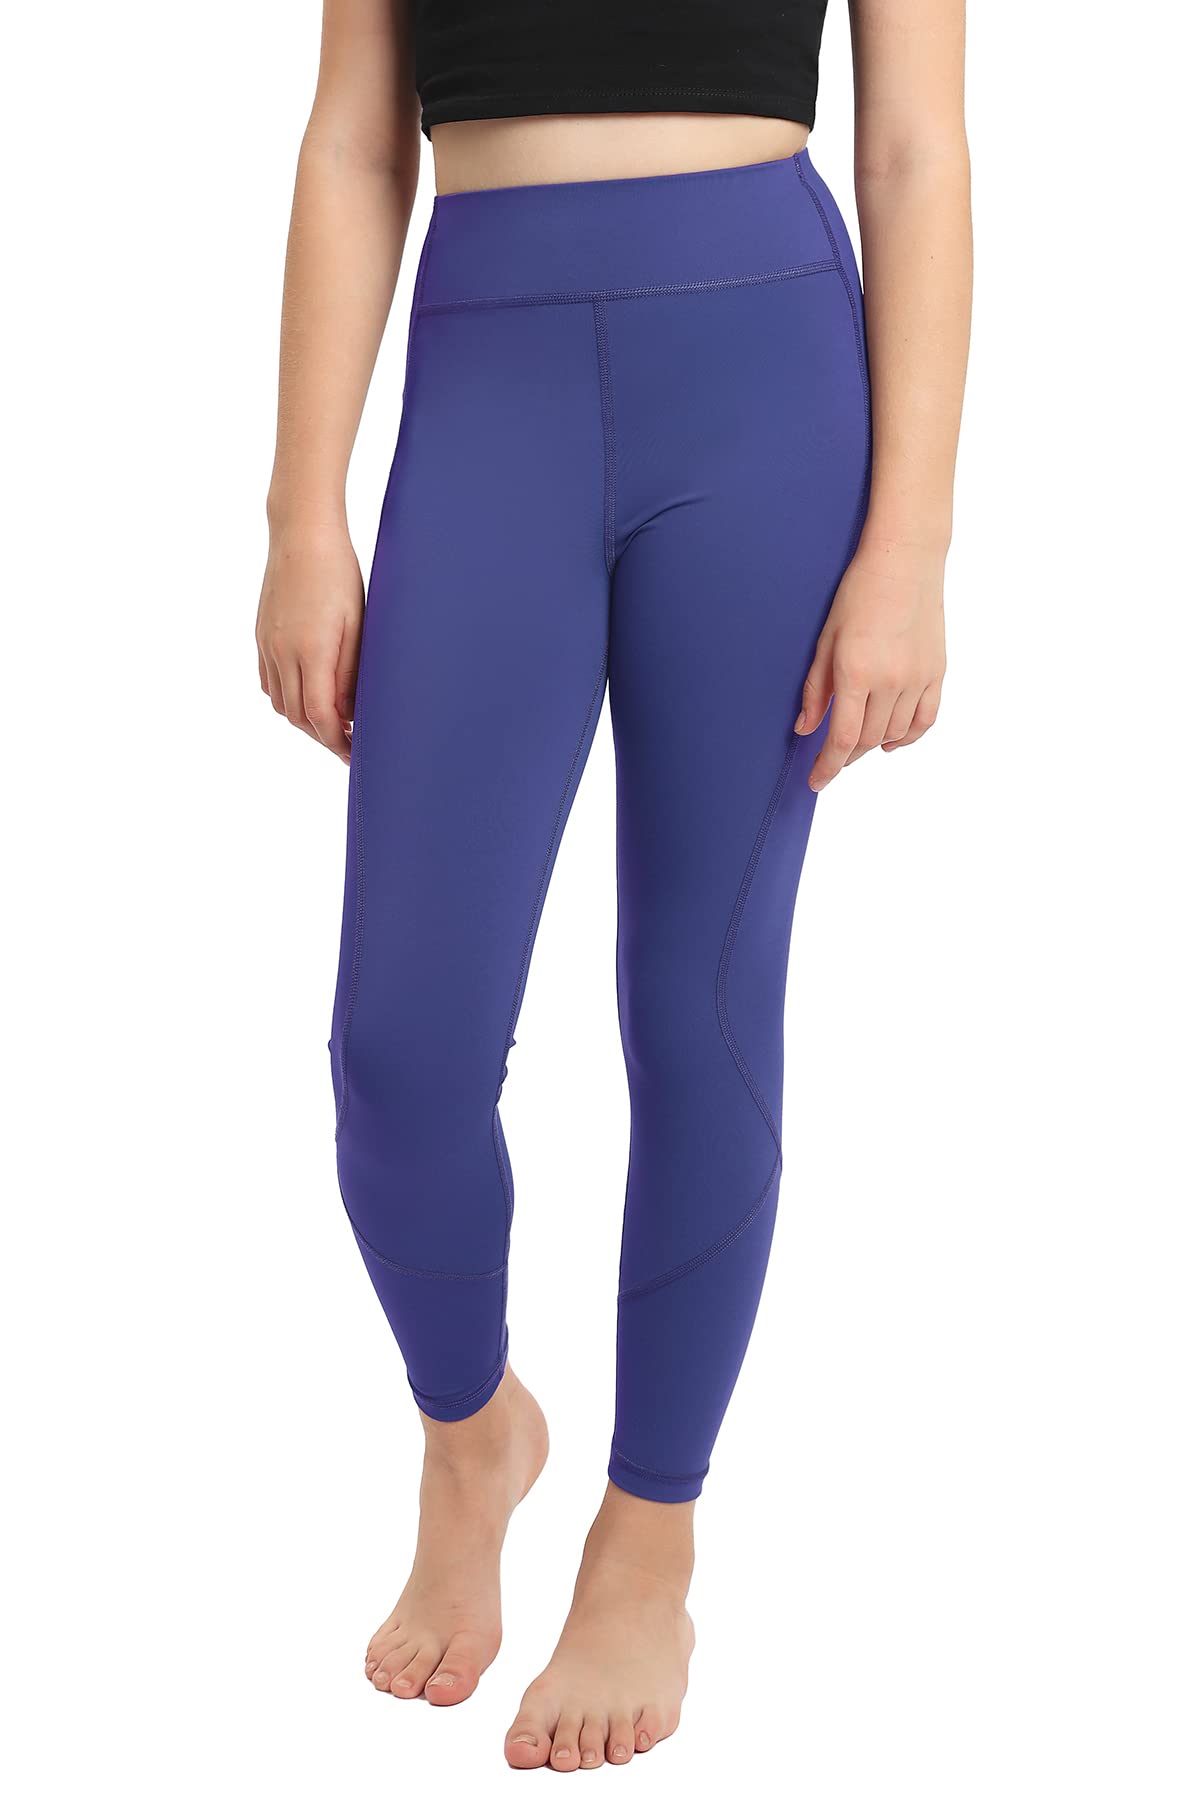 Women High Waist Yoga Pants Stretch Workout Leggings, S, Purple